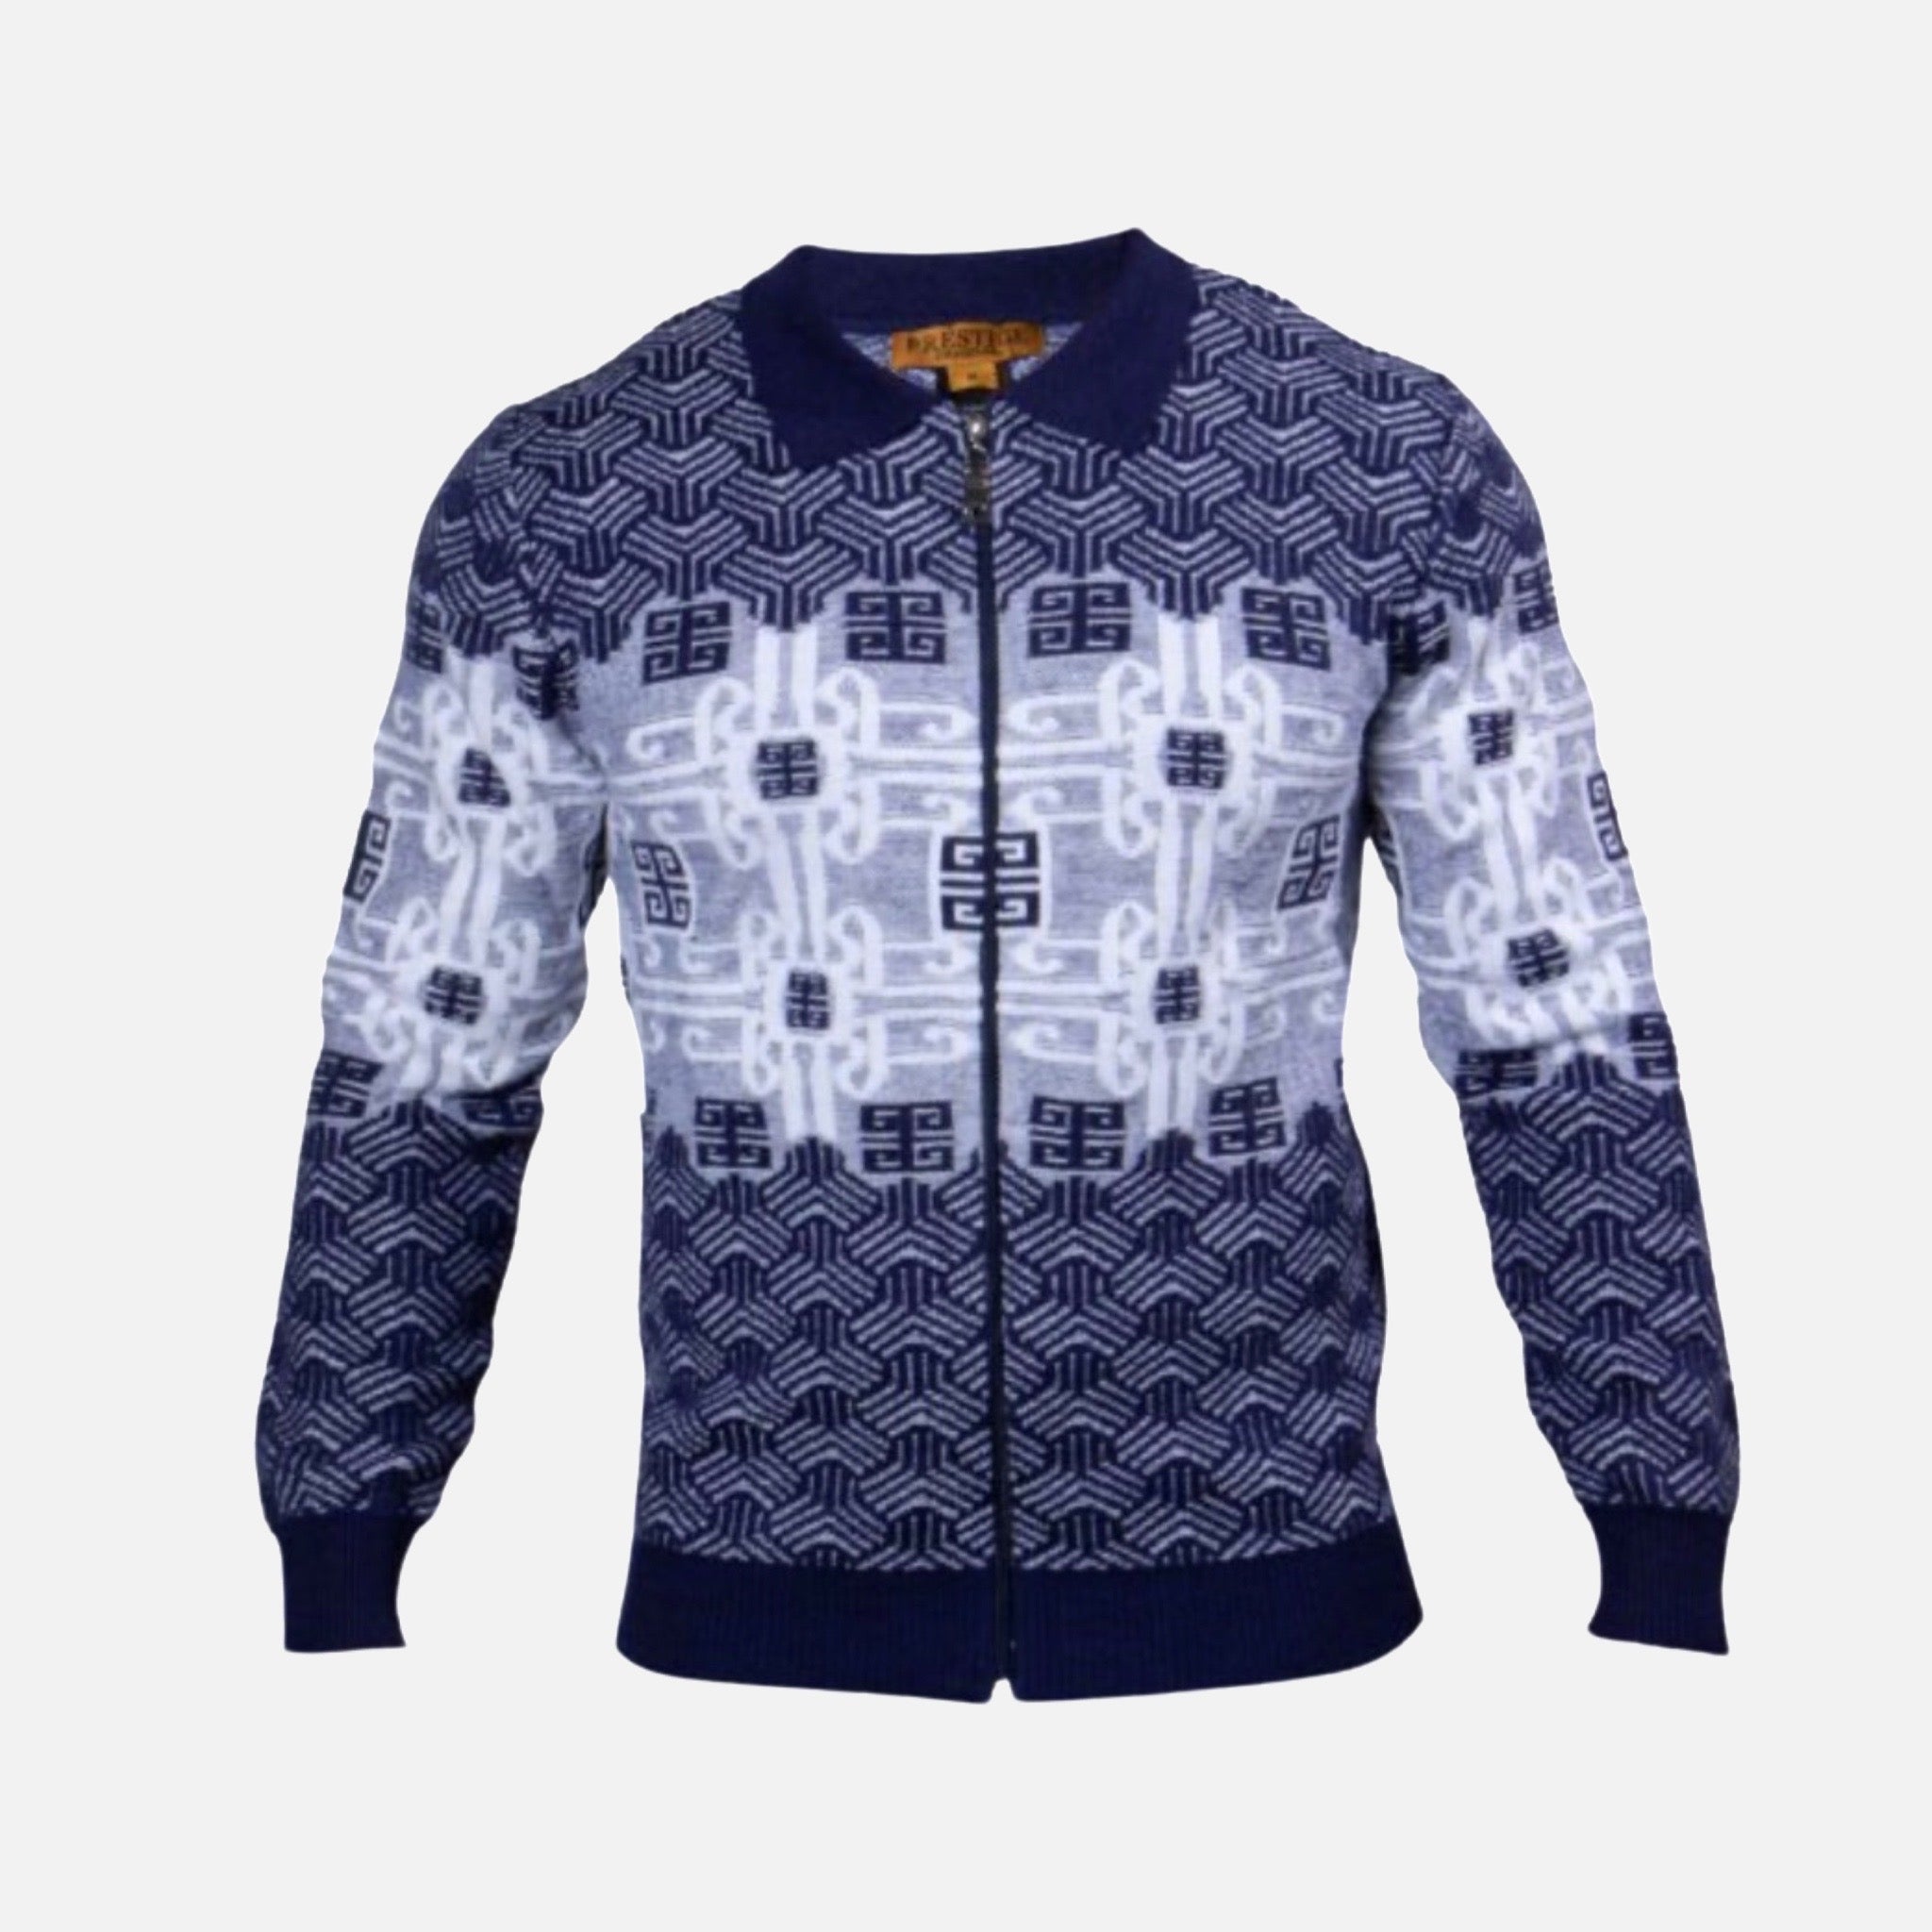 Prestige Wool Full Zip Blue Sweater for Men - Classic Fit